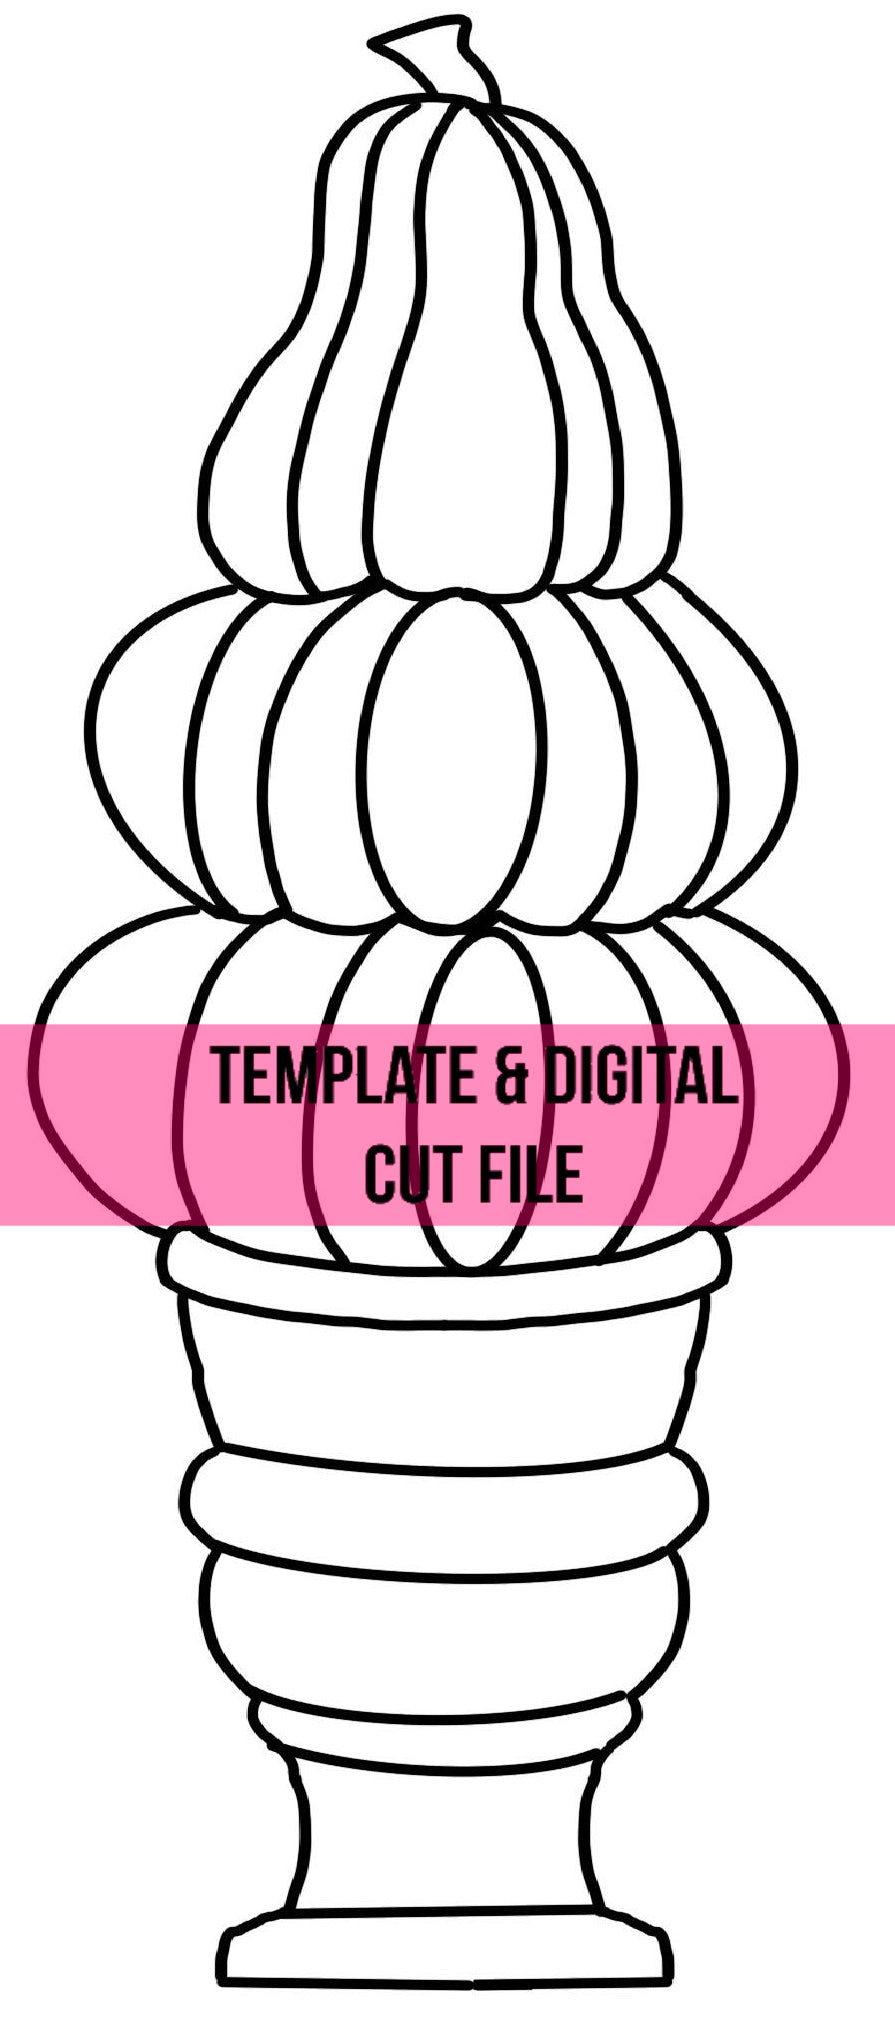 Pumpkin Topiary Template & Digital Cut File